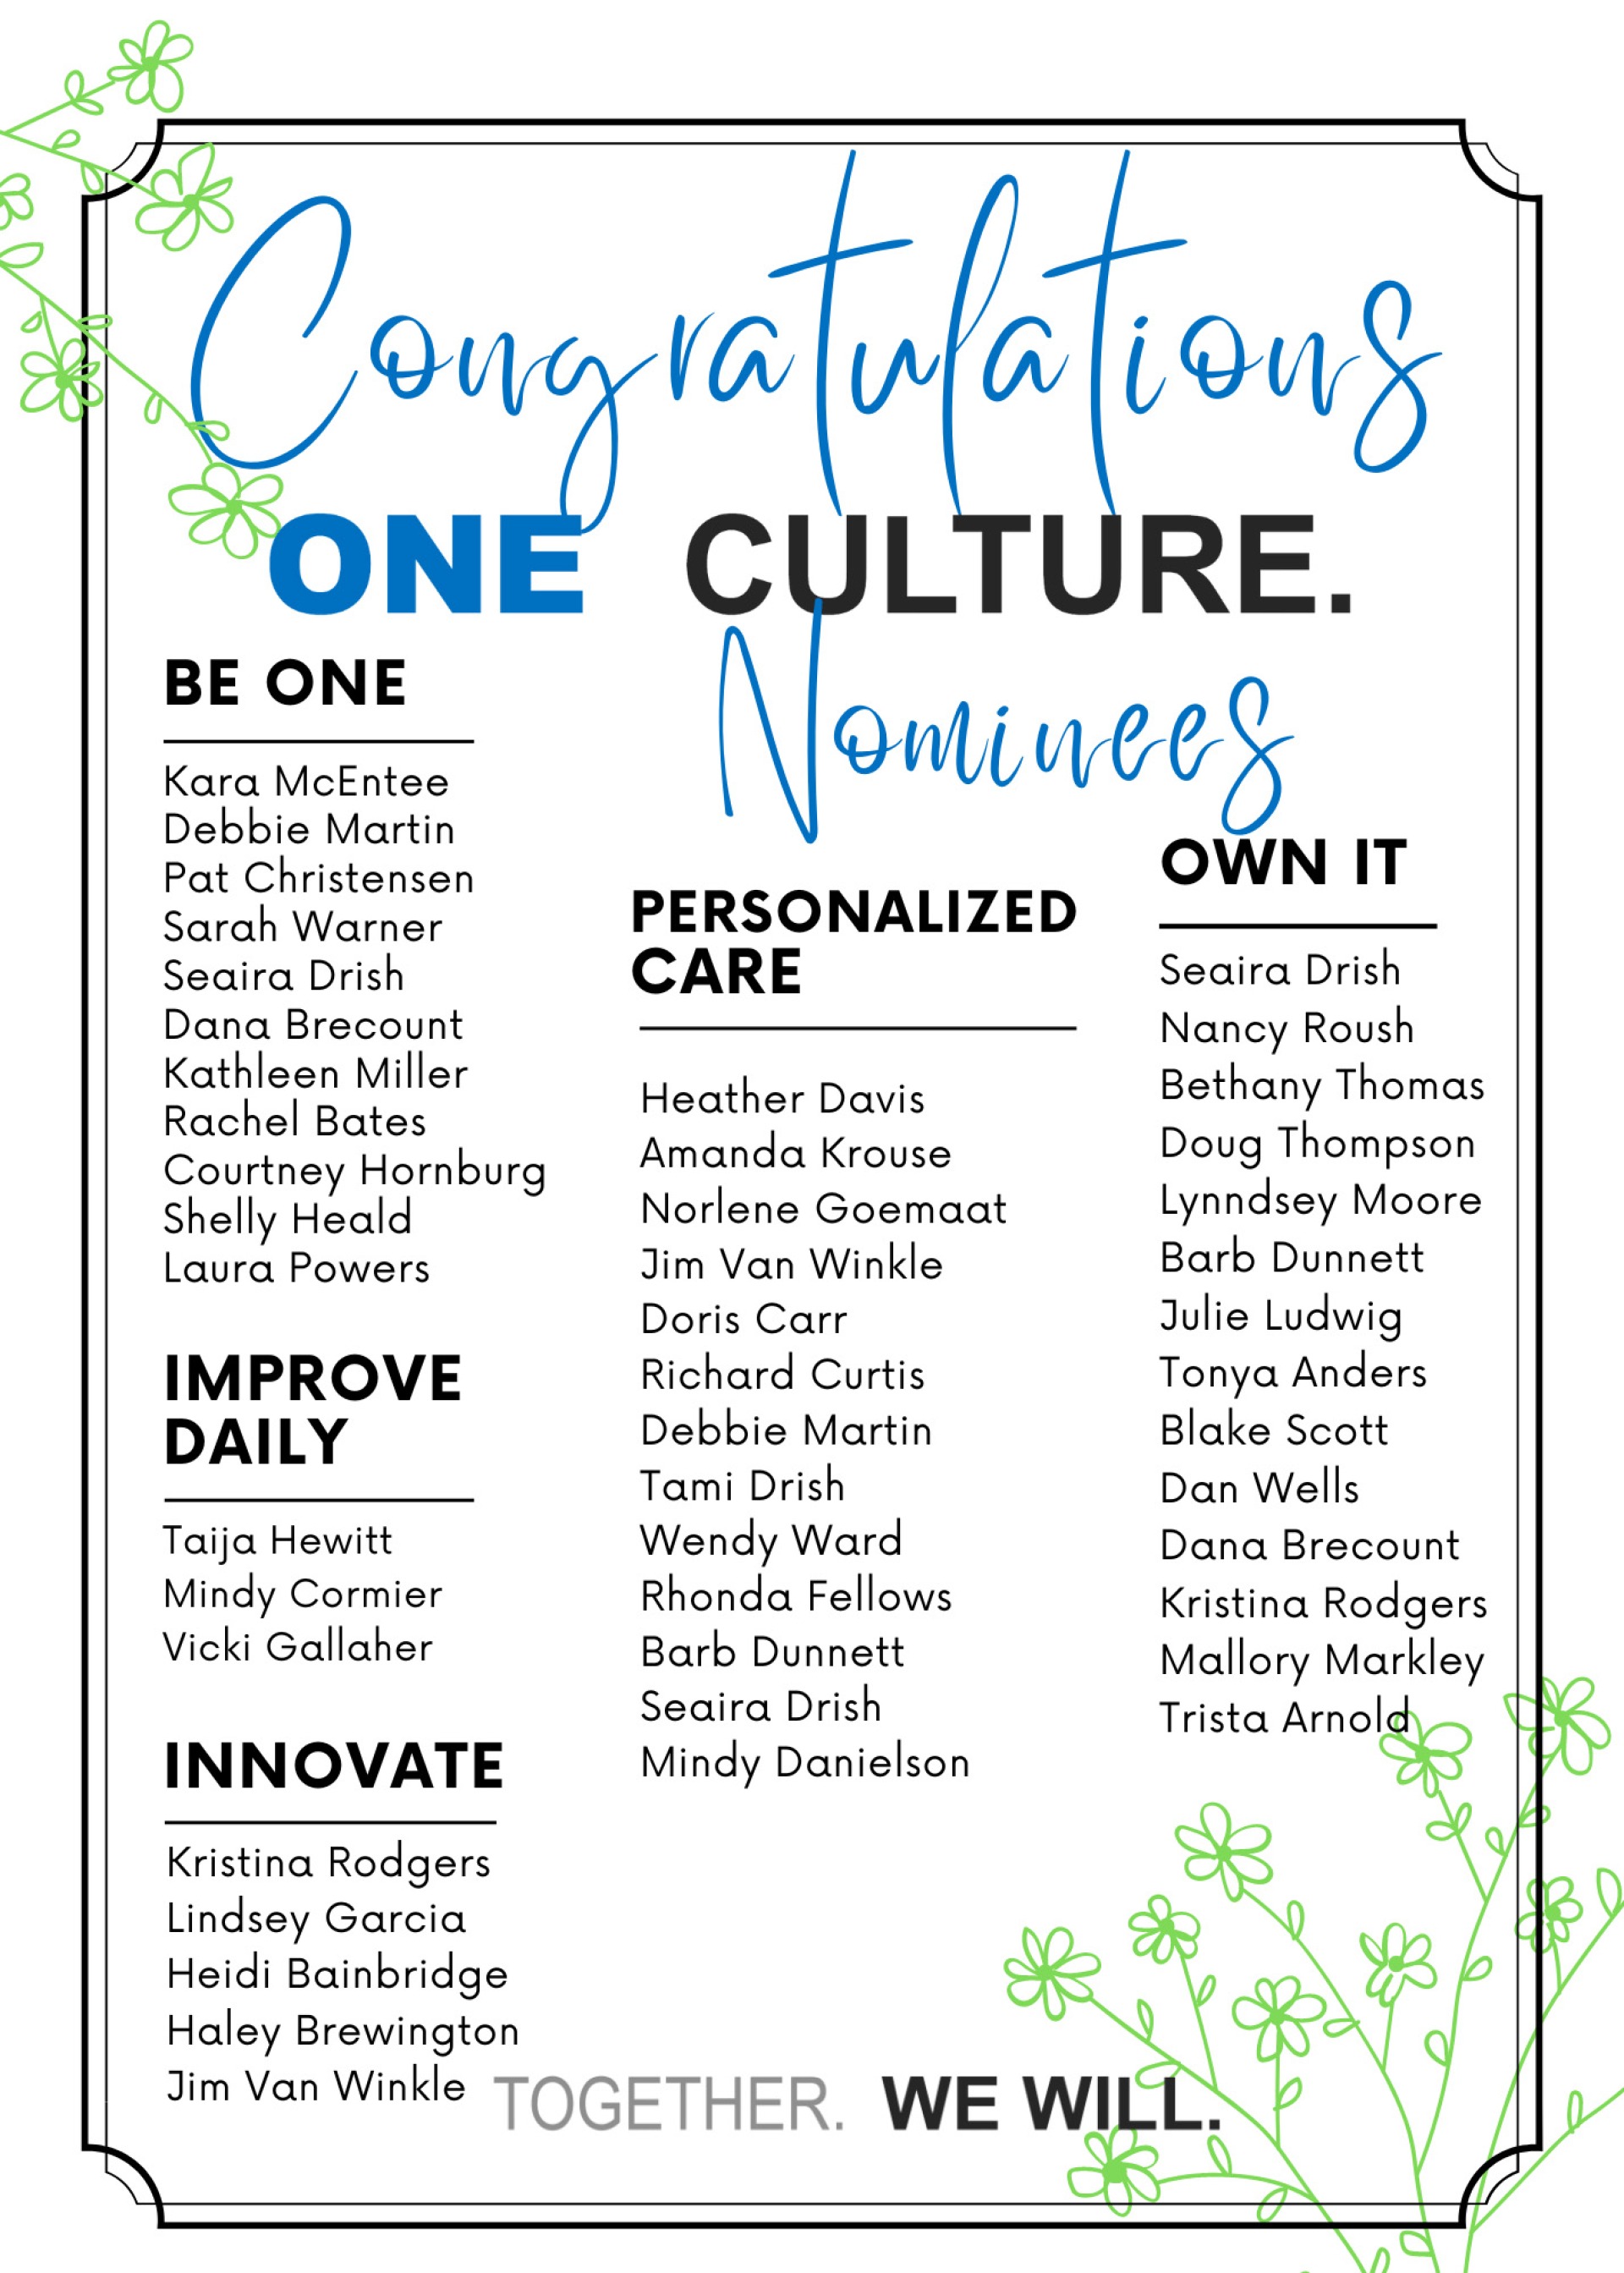 Congratulations, Van Buren County Hospital One Culture nominees!